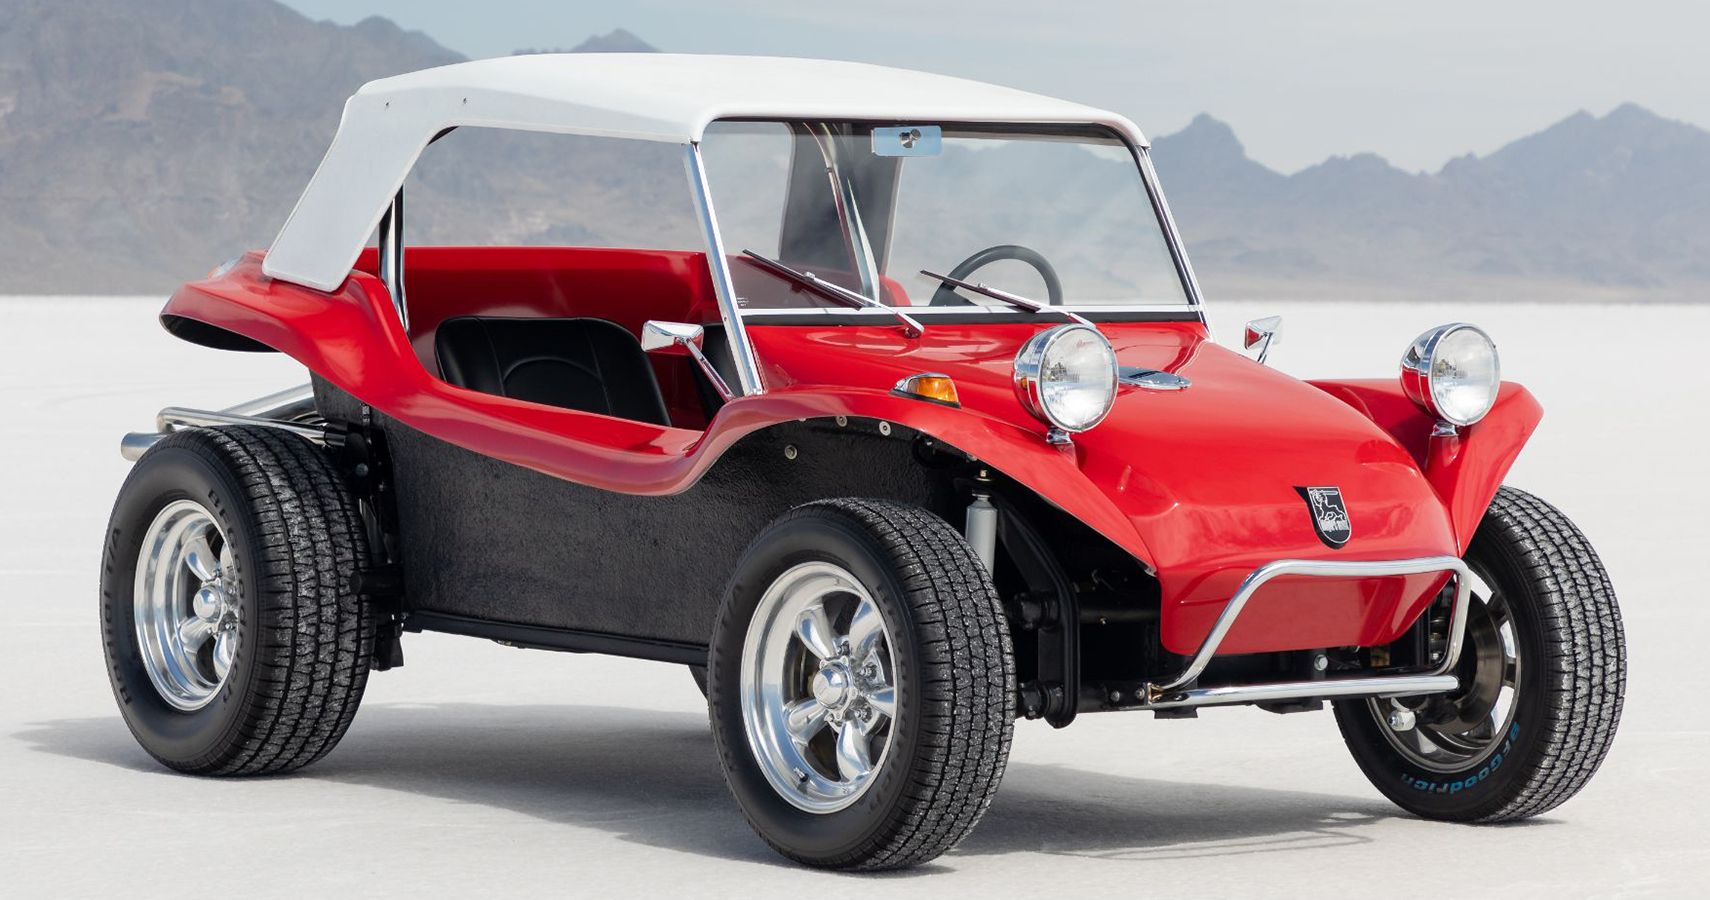 These Are The Coolest Volkswagen Dune Buggies We've Ever Seen